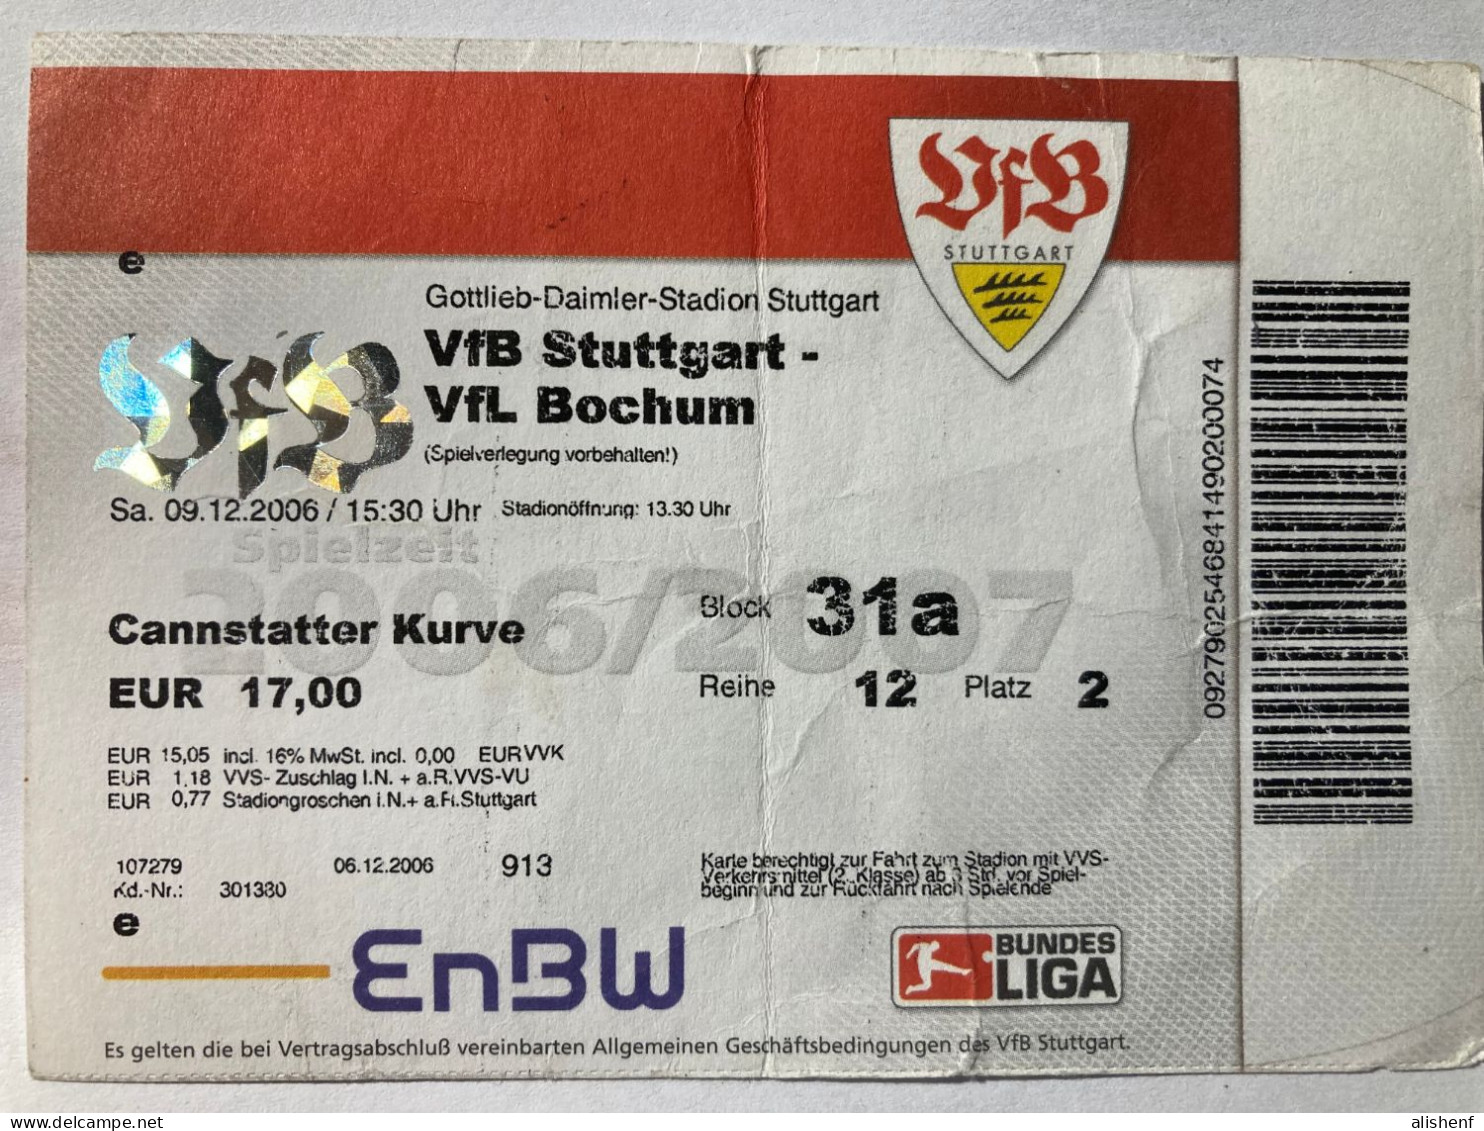 Stuttgart - Bochum Ticket Stadium Daimler Stadion Stuttgart 6.12.2006 - Toegangskaarten